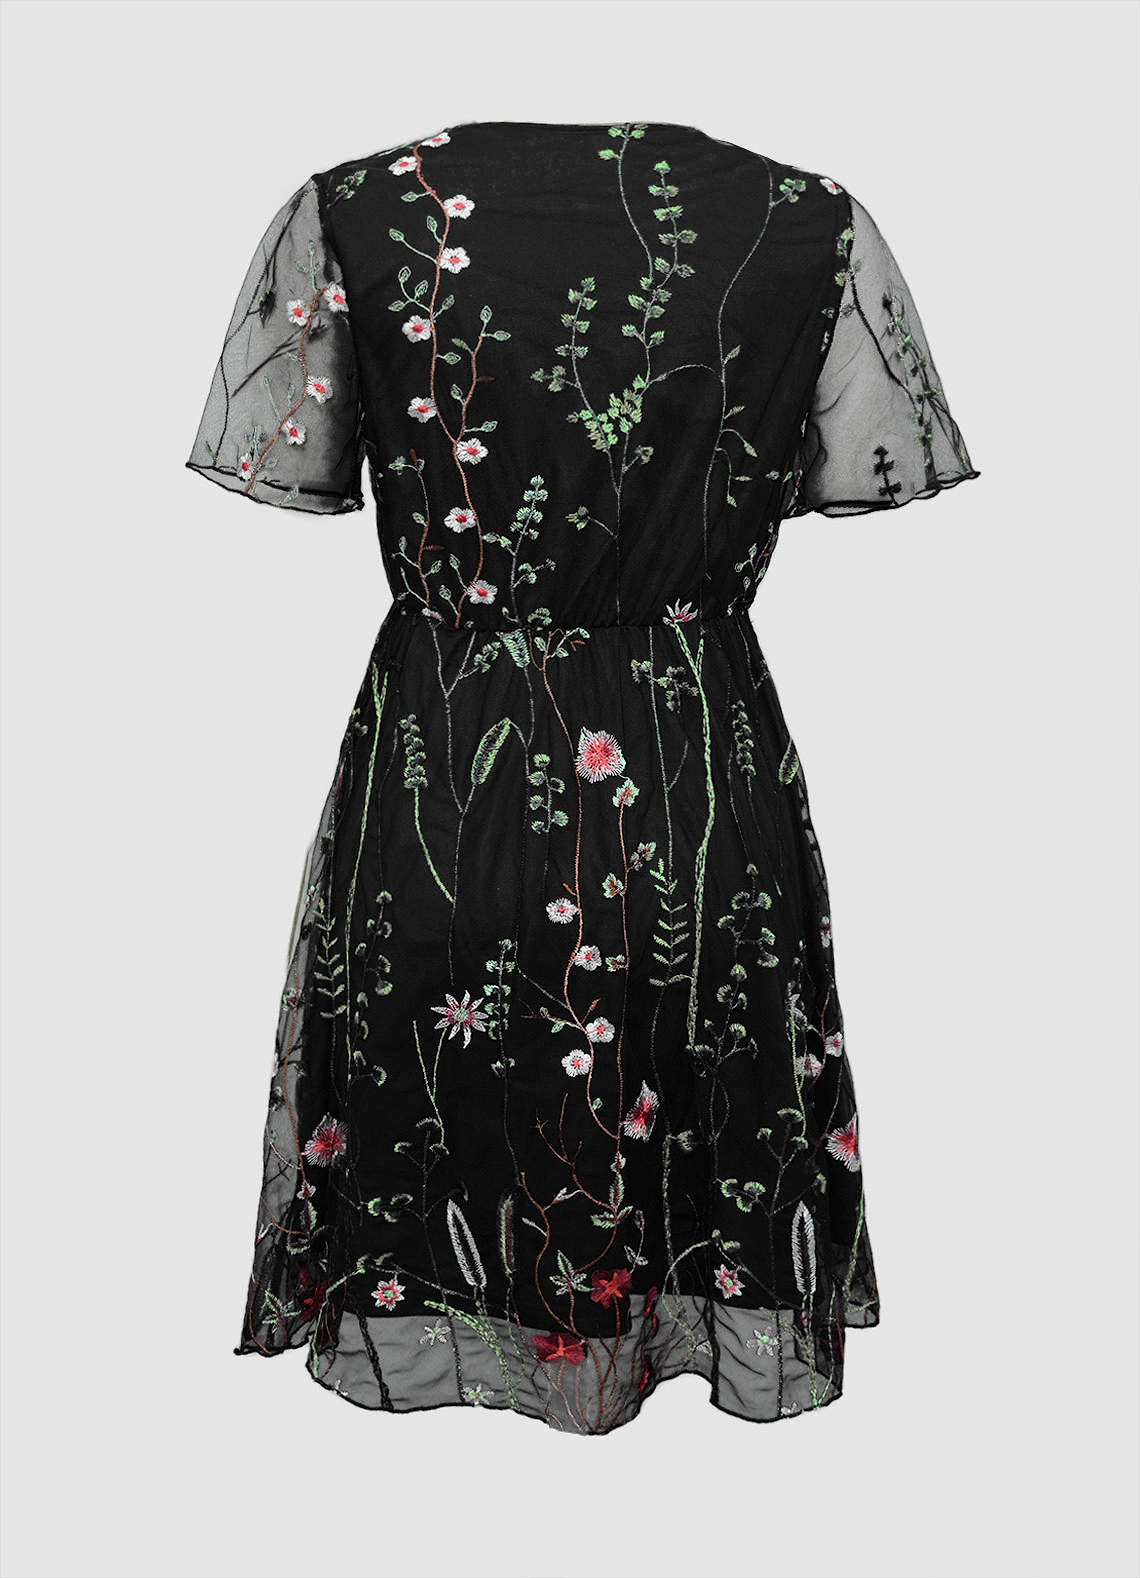 Darling Romance Black Floral Embroidery Mini Dress image1